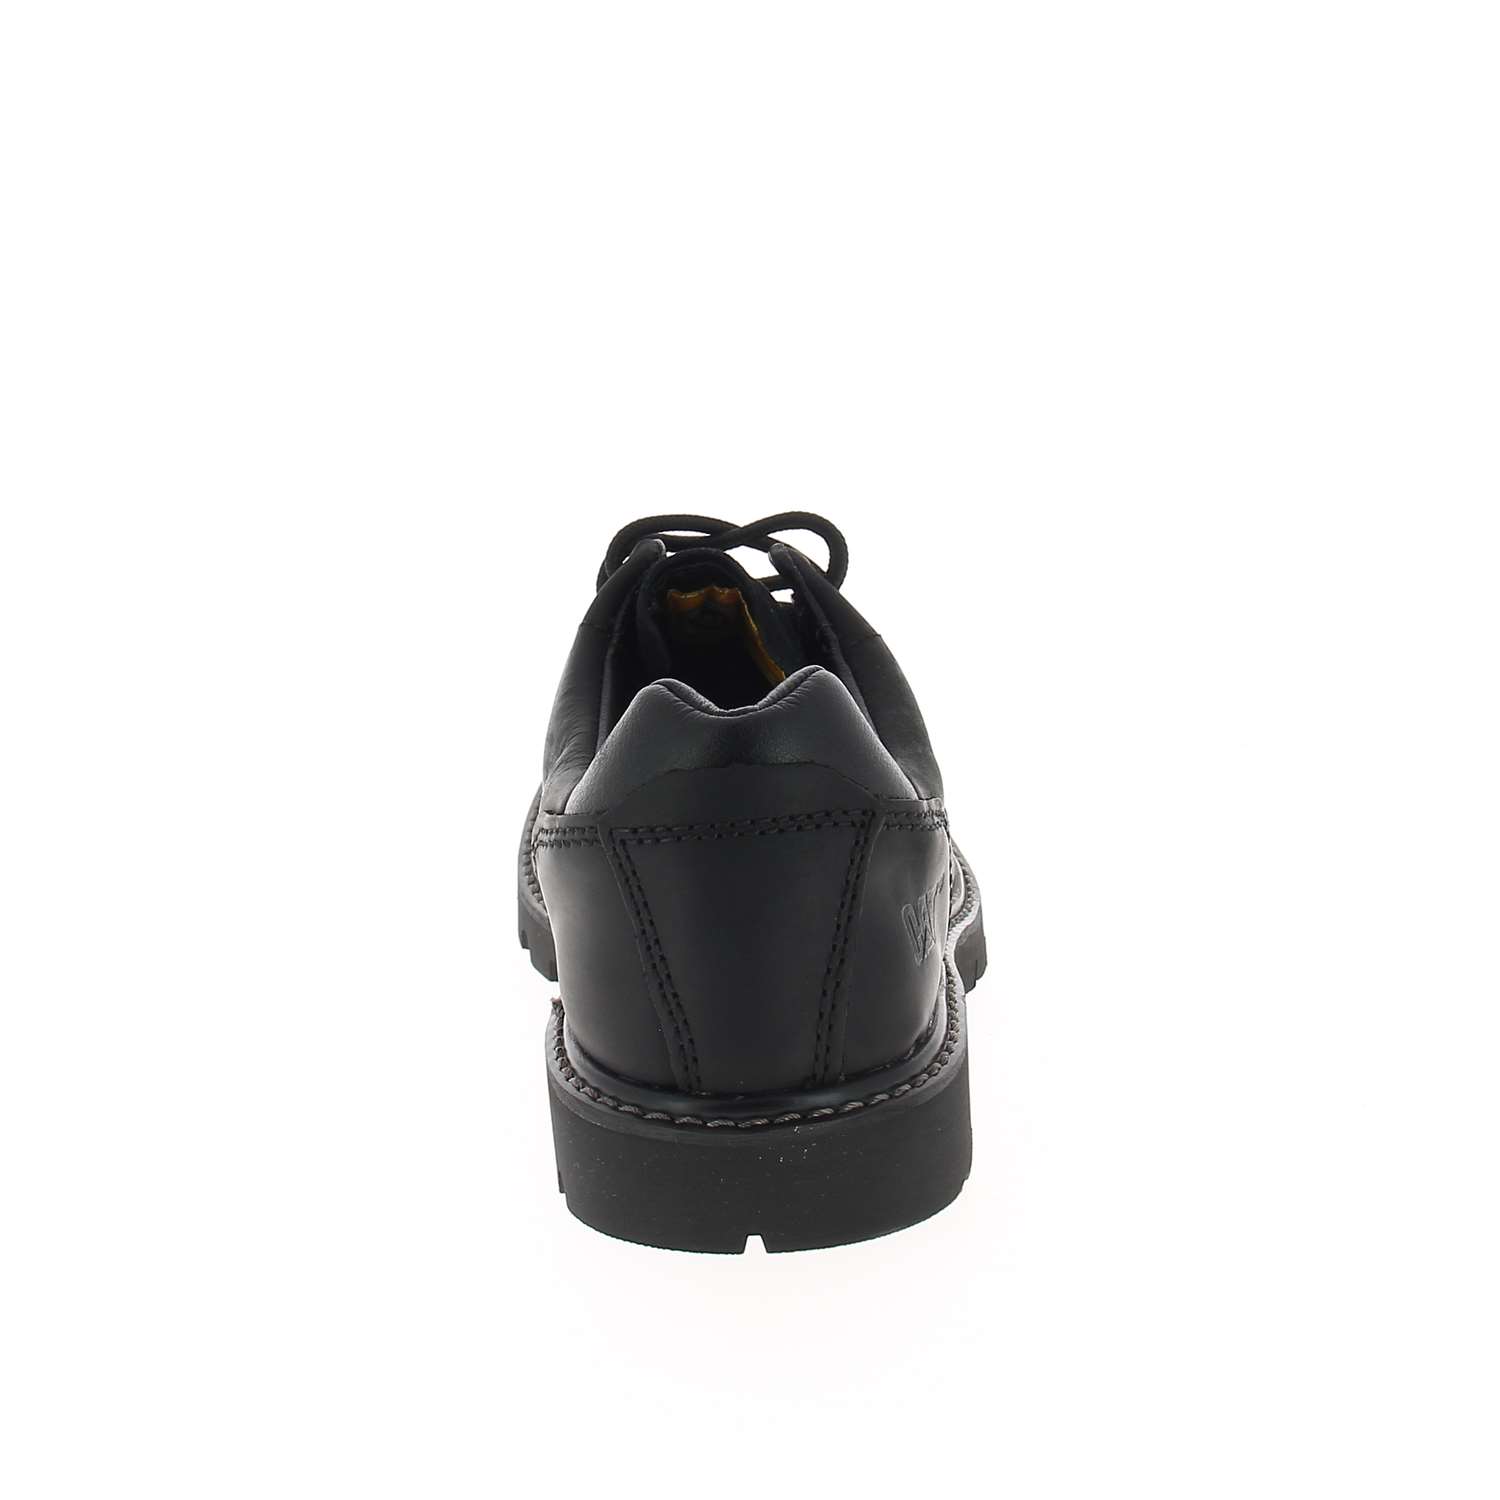 04 - COLORADO LOW - CATERPILLAR - Chaussures à lacets - Cuir